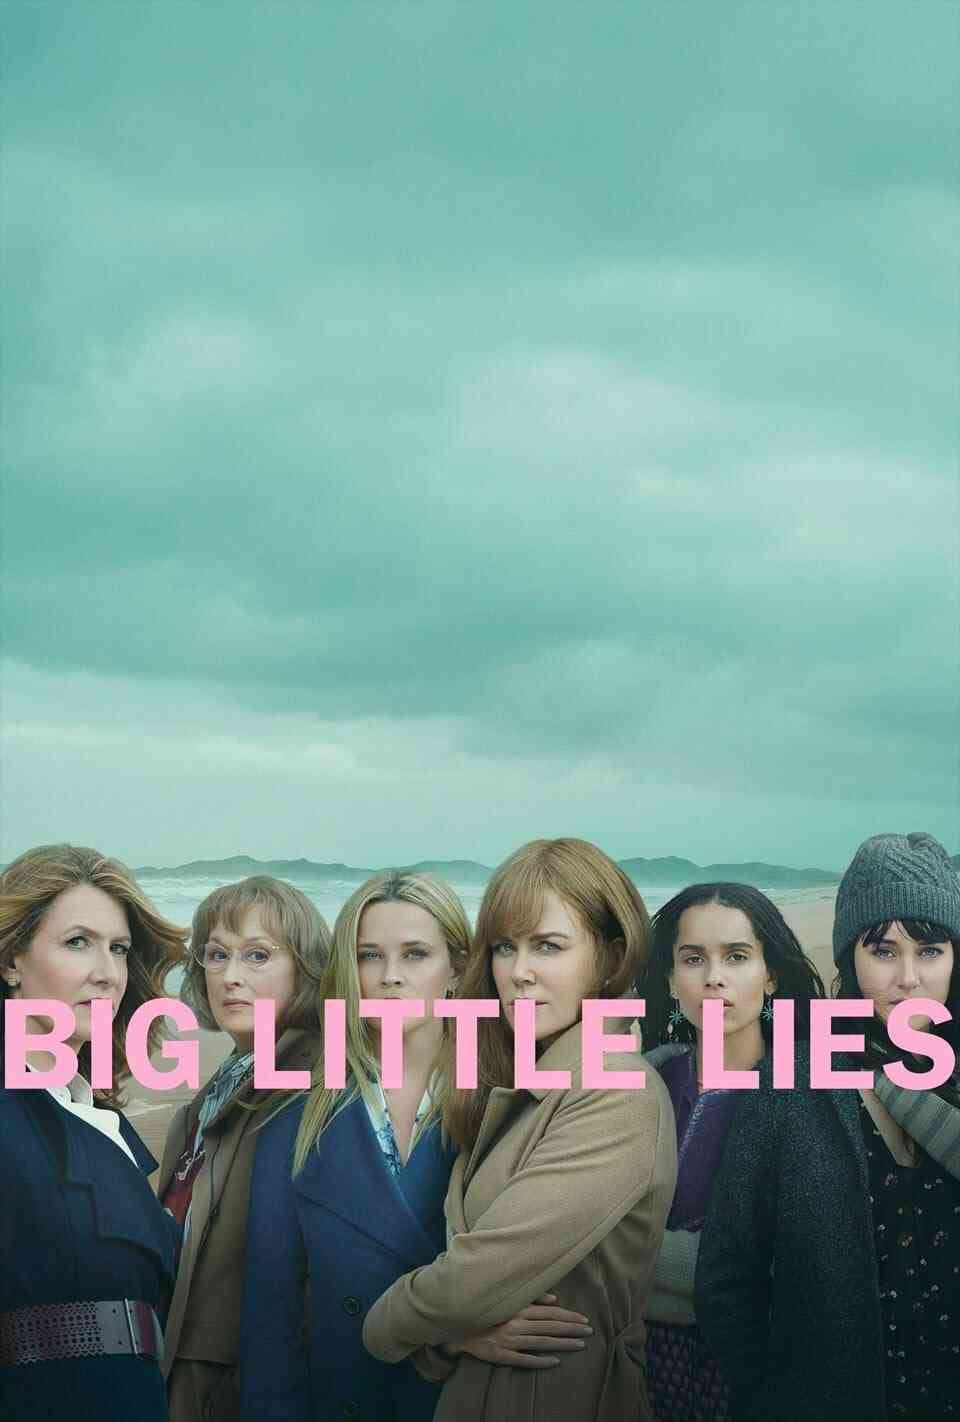 Read Big Little Lies screenplay.